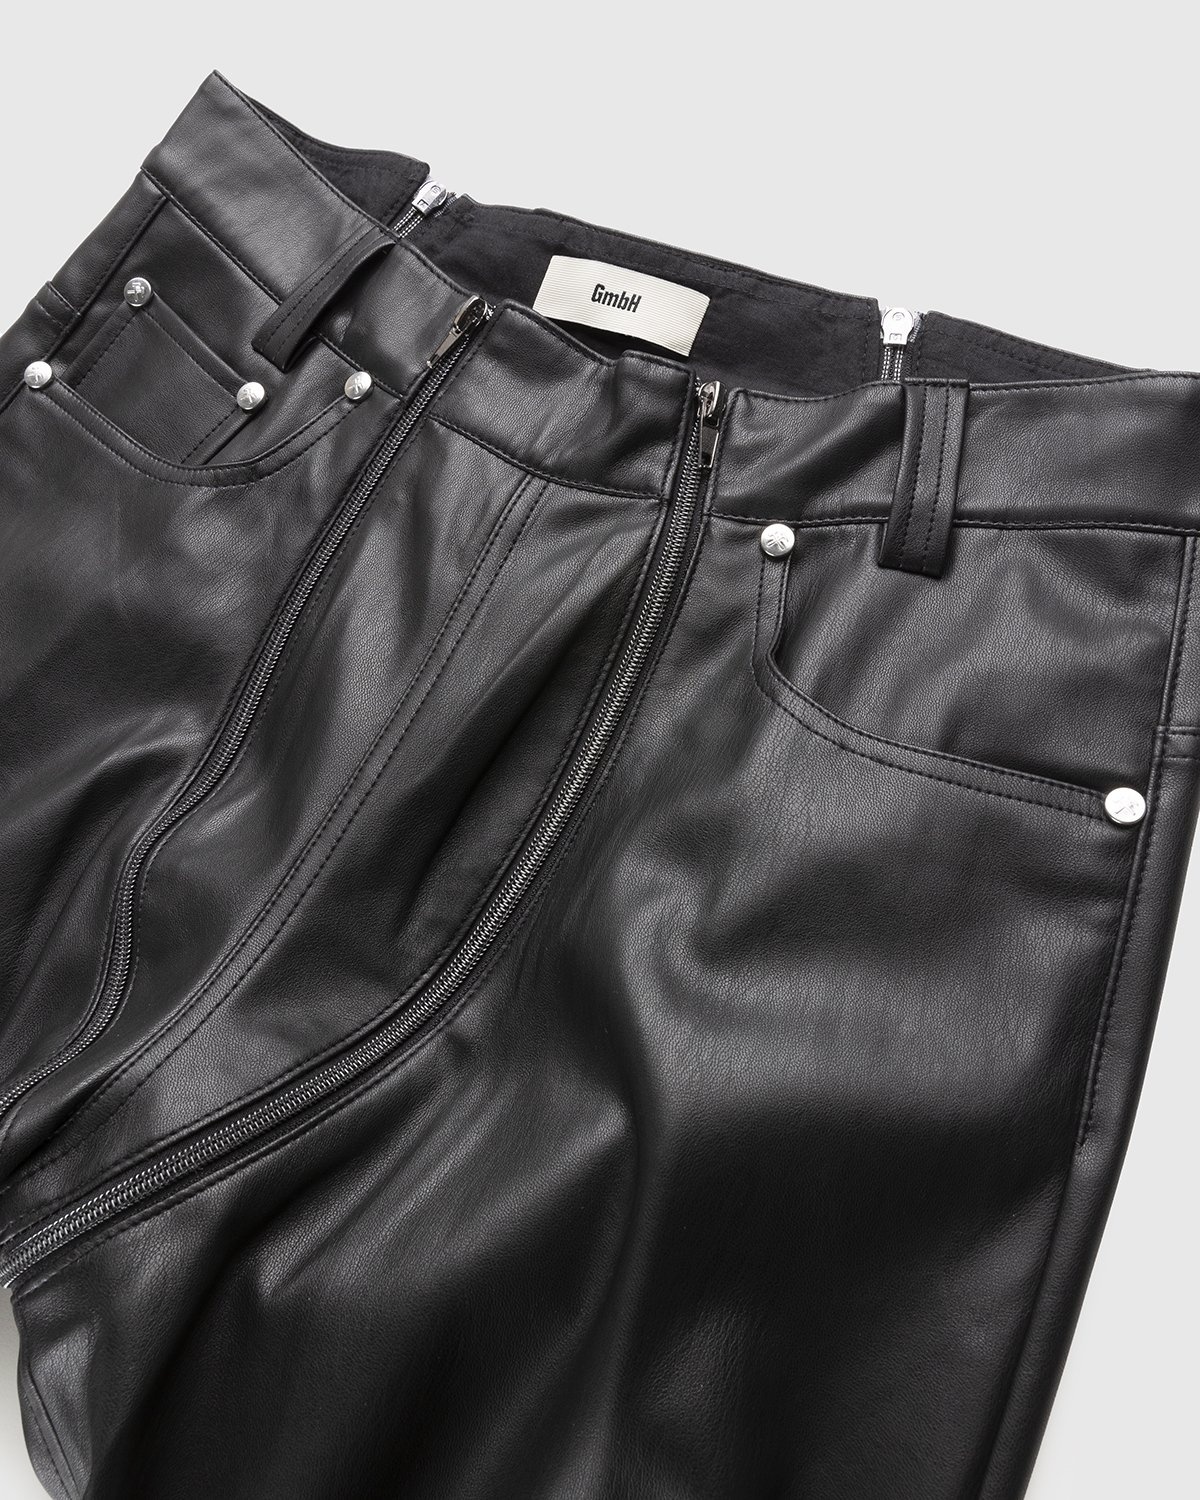 GmbH – Lata Pleather Pants Black - Pants - Black - Image 7